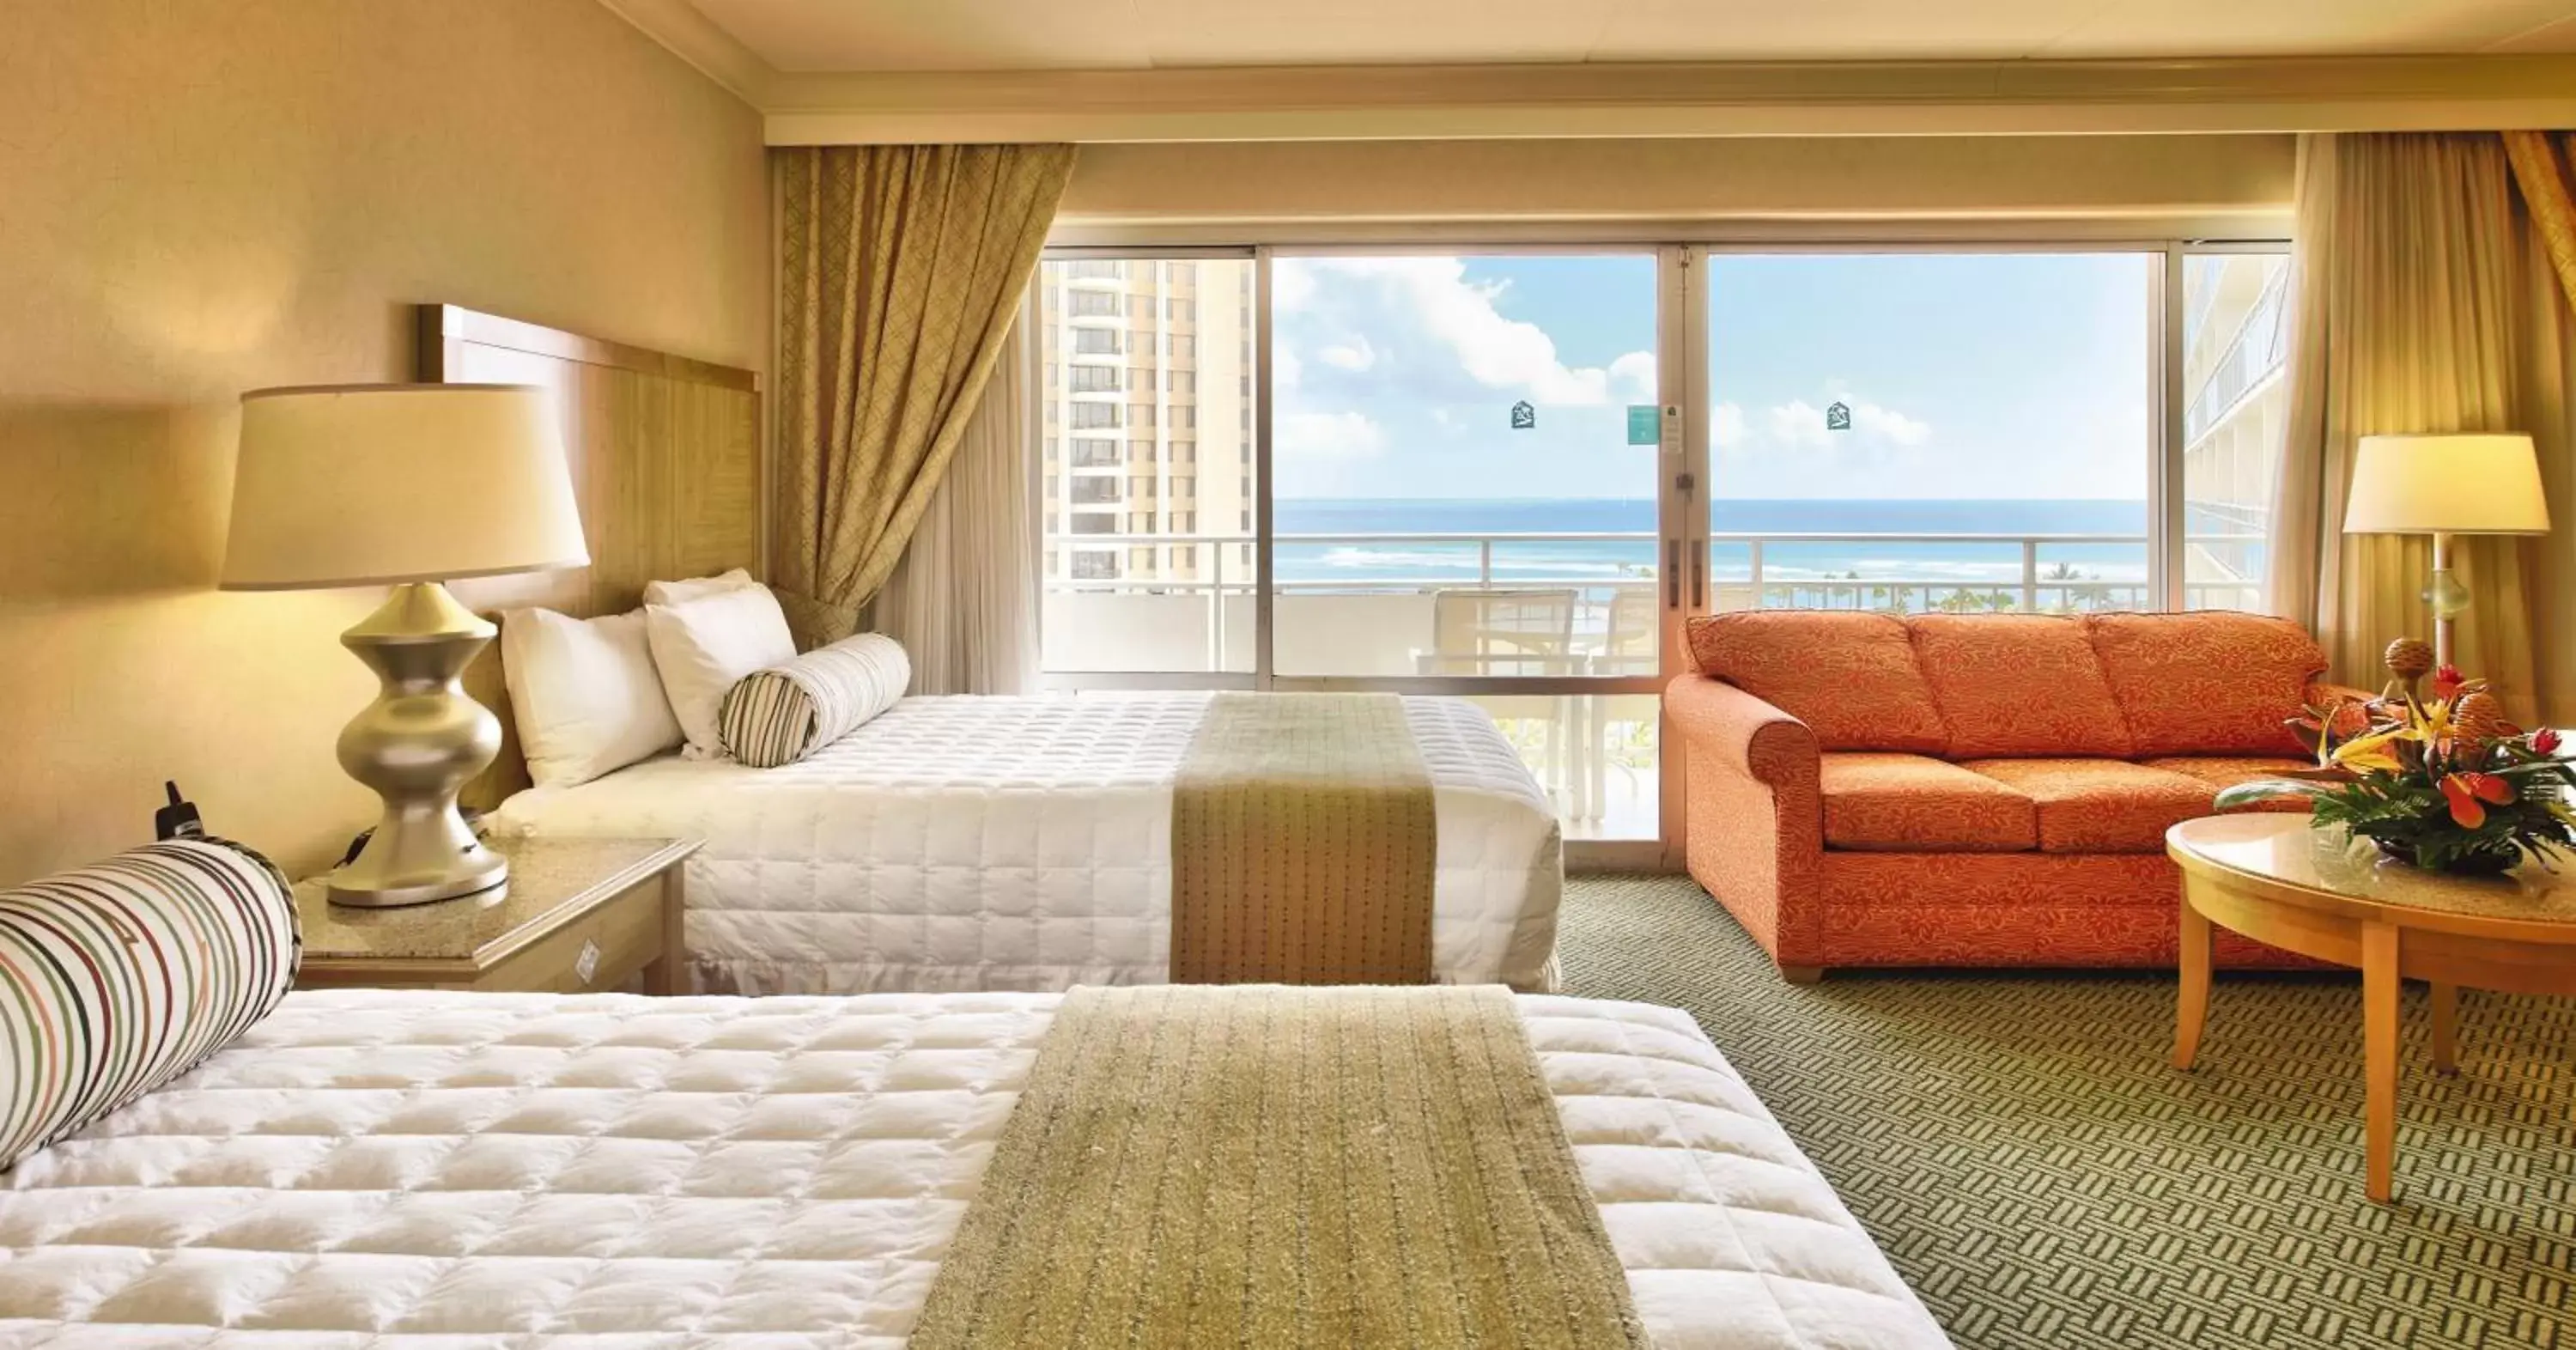 Studio City View with Two Full Beds in Waikiki Marina Resort at the Ilikai